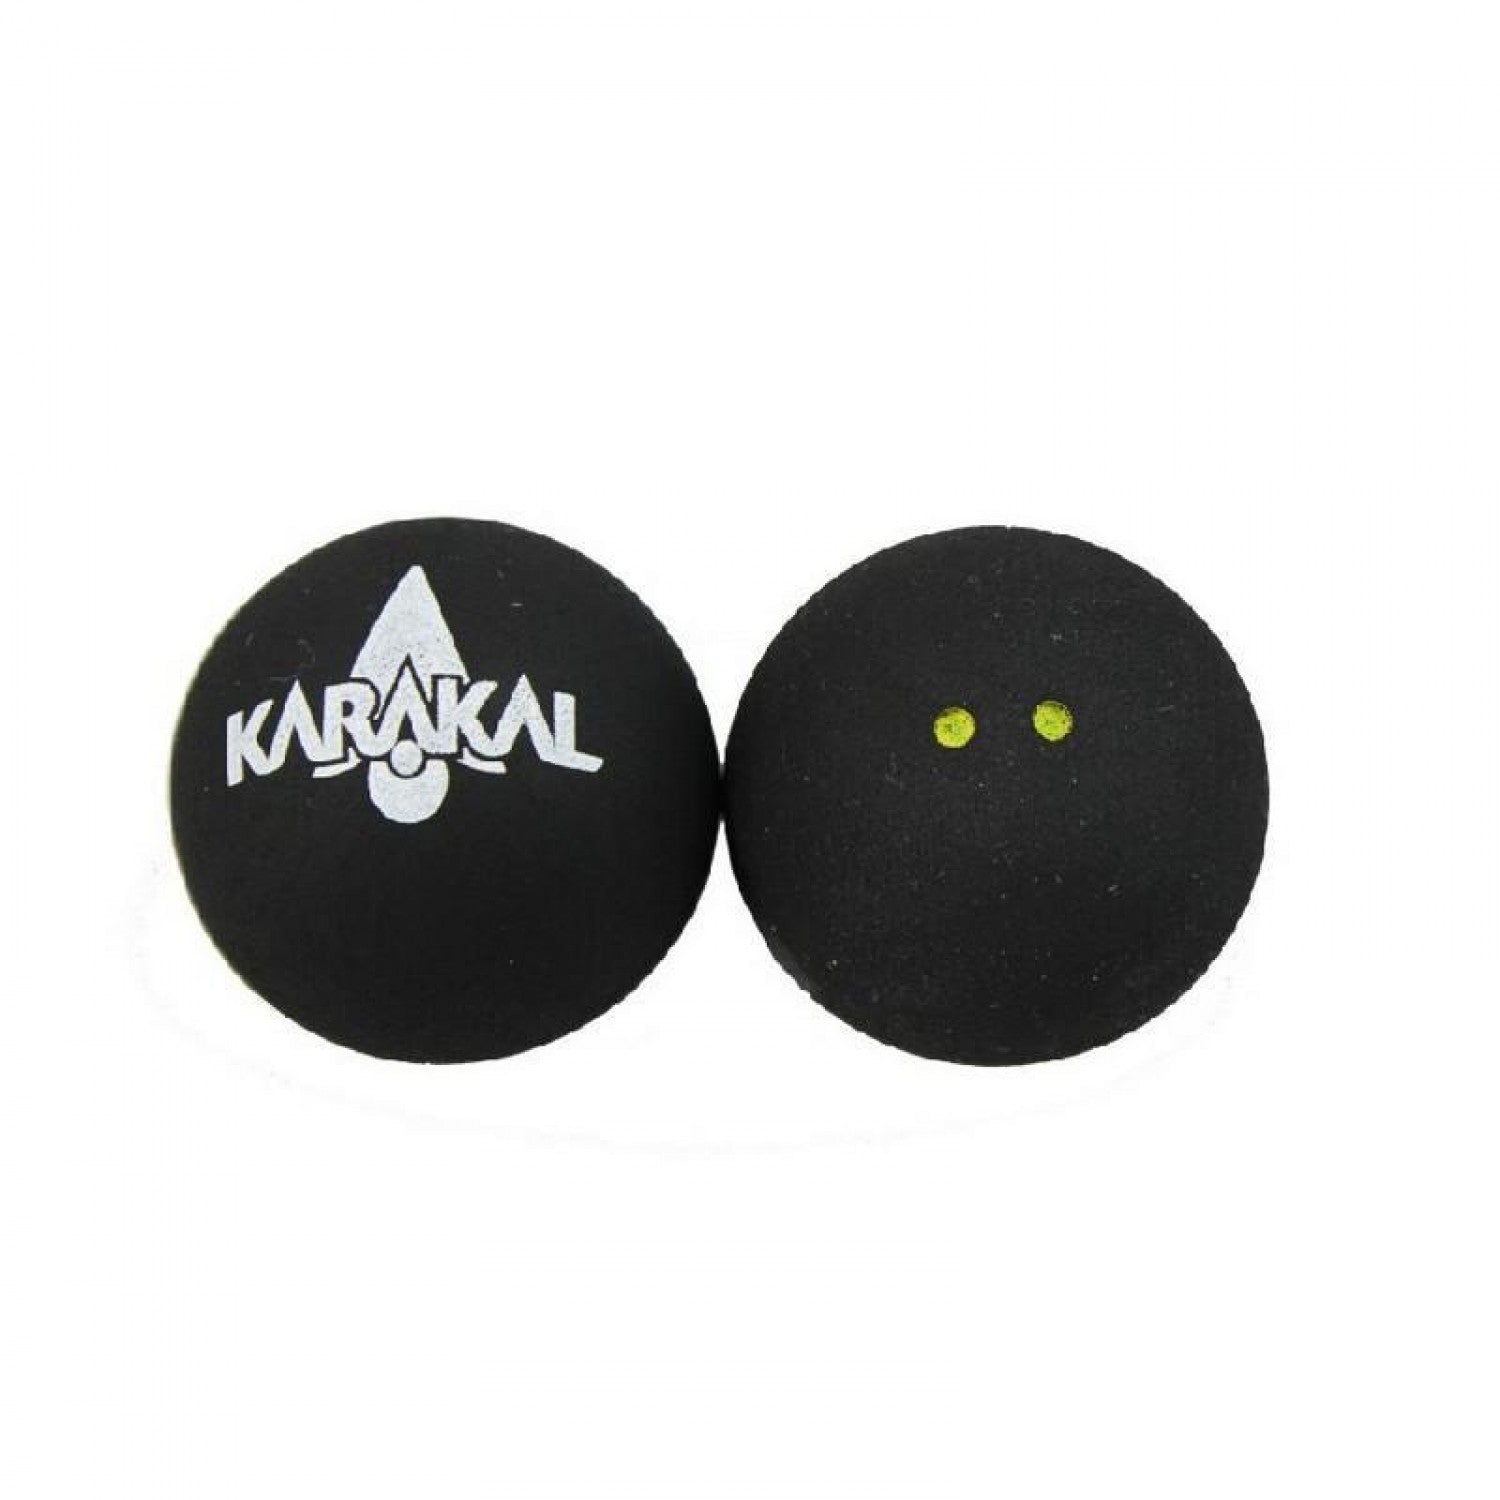 Karakal Double Yellow Dot Squash Balls (1 Ball) - atr-sports